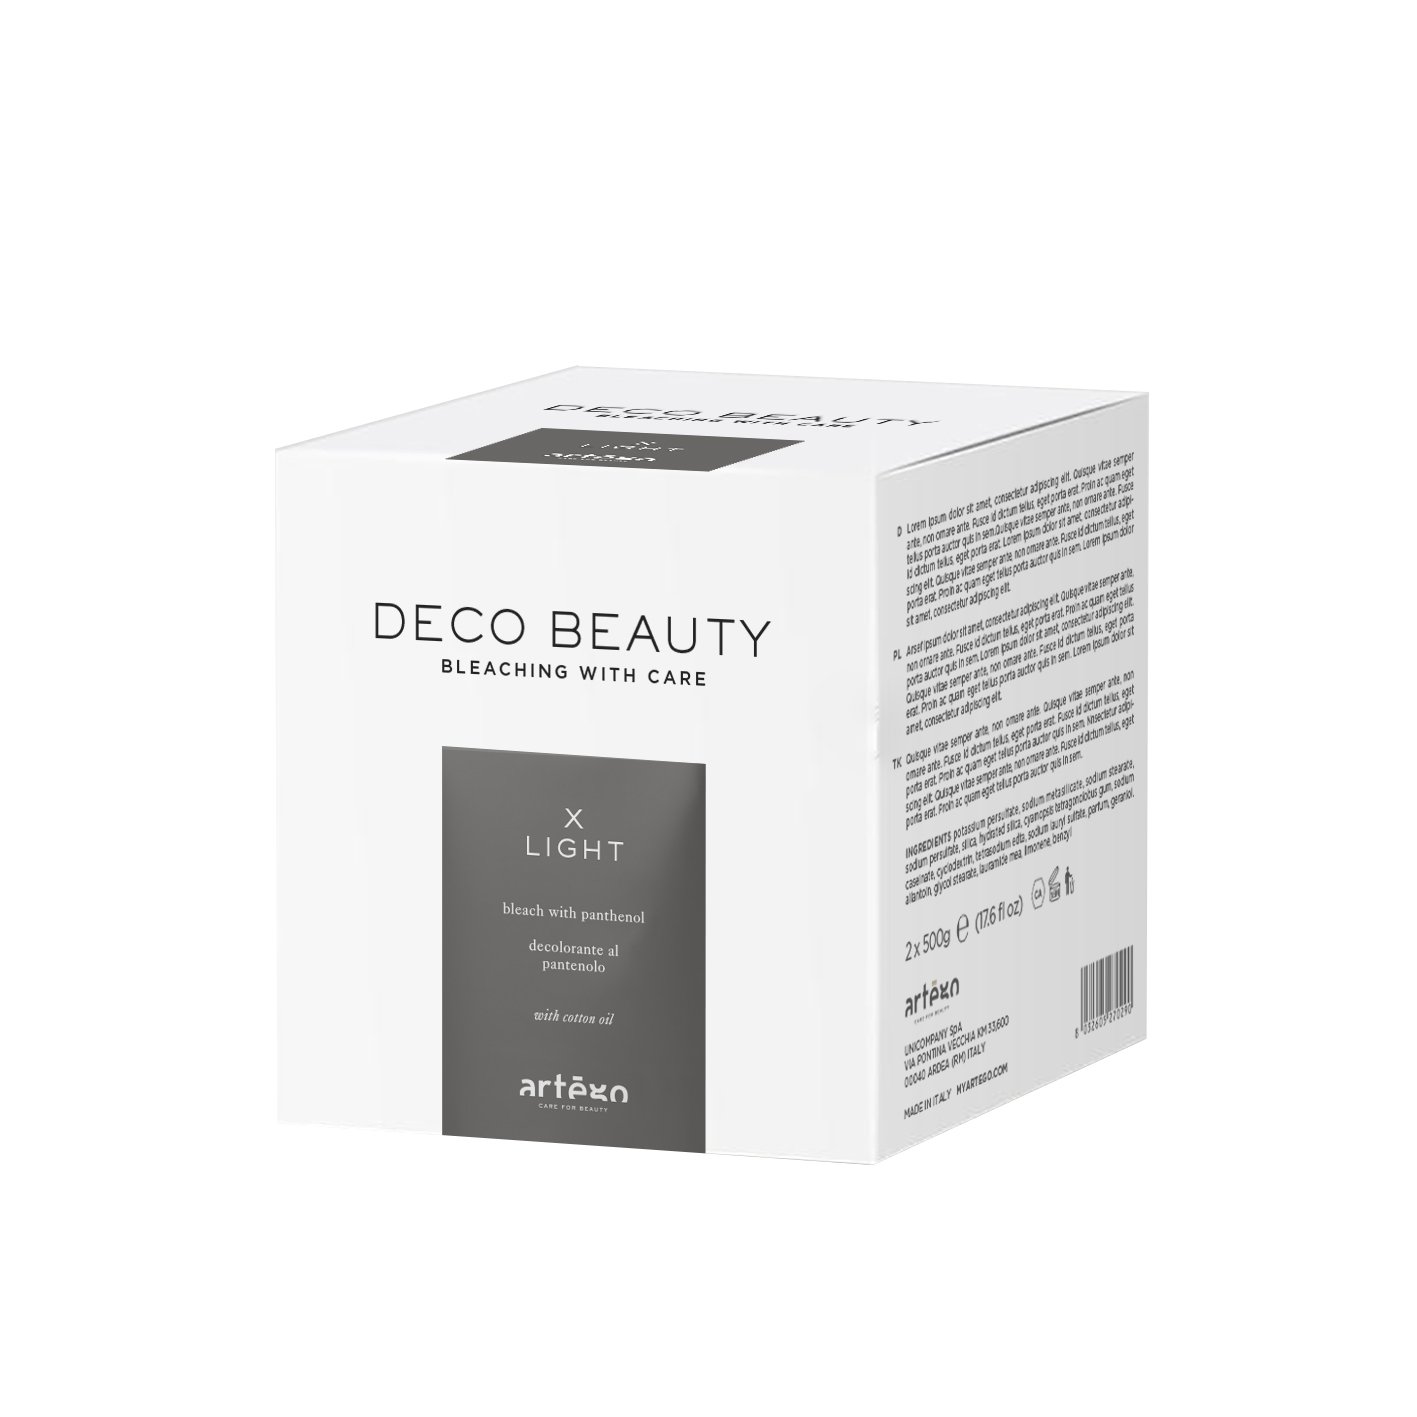 Deco Beauty X-light